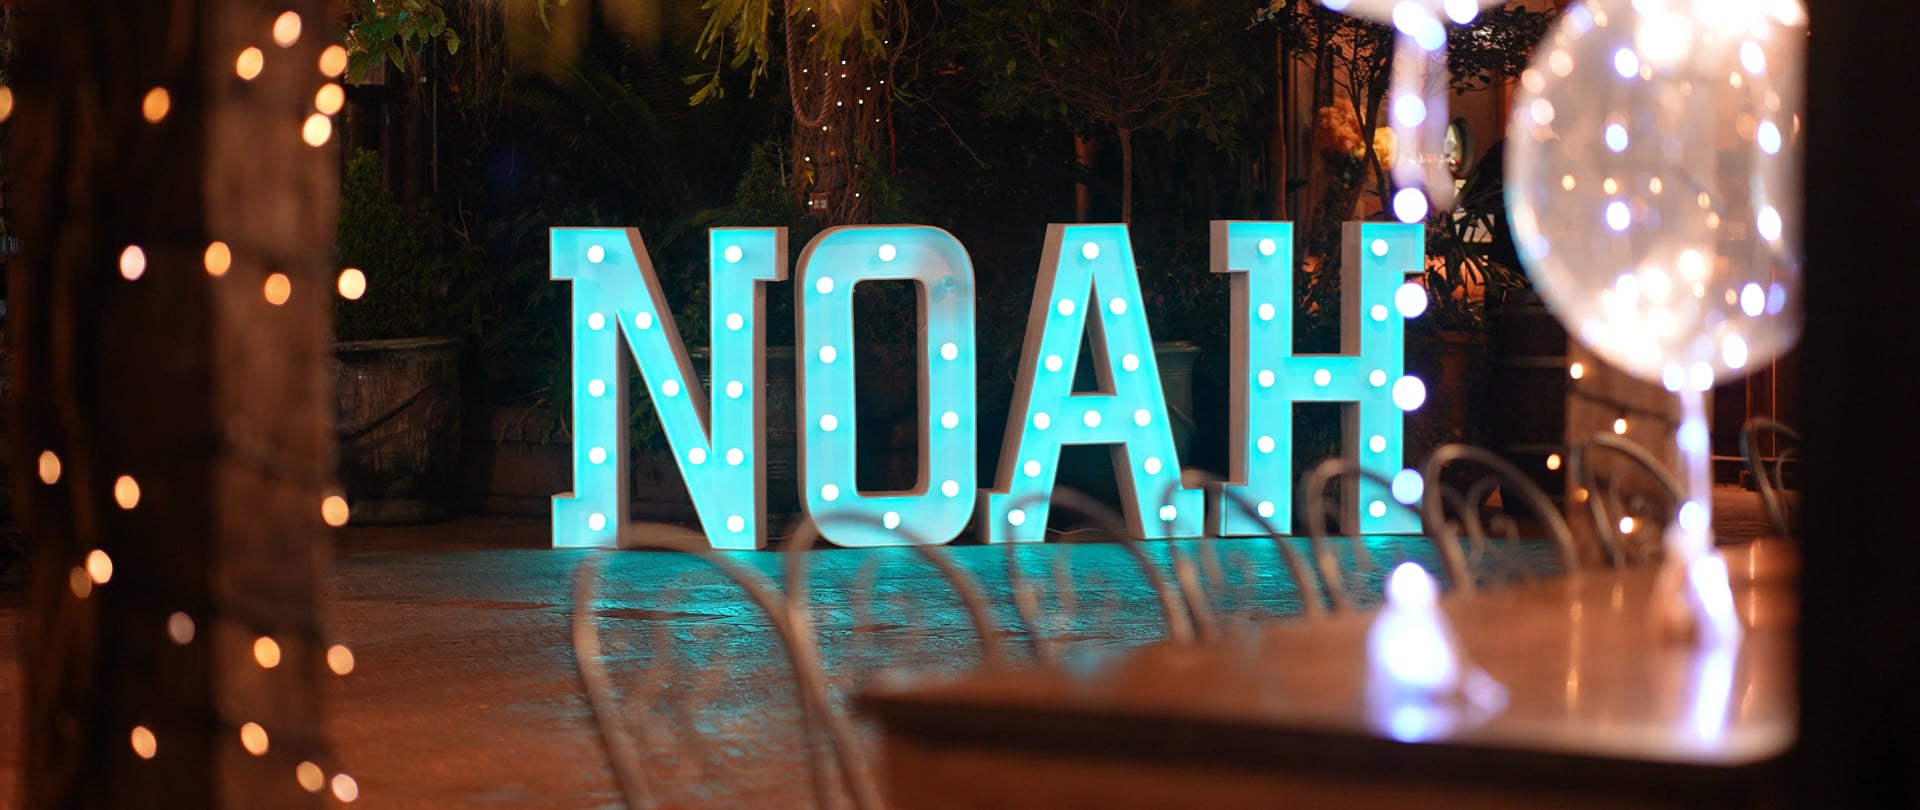 Noah’s Bar Mitzvah Wedding Video Filmed at Sydney, New South Wales